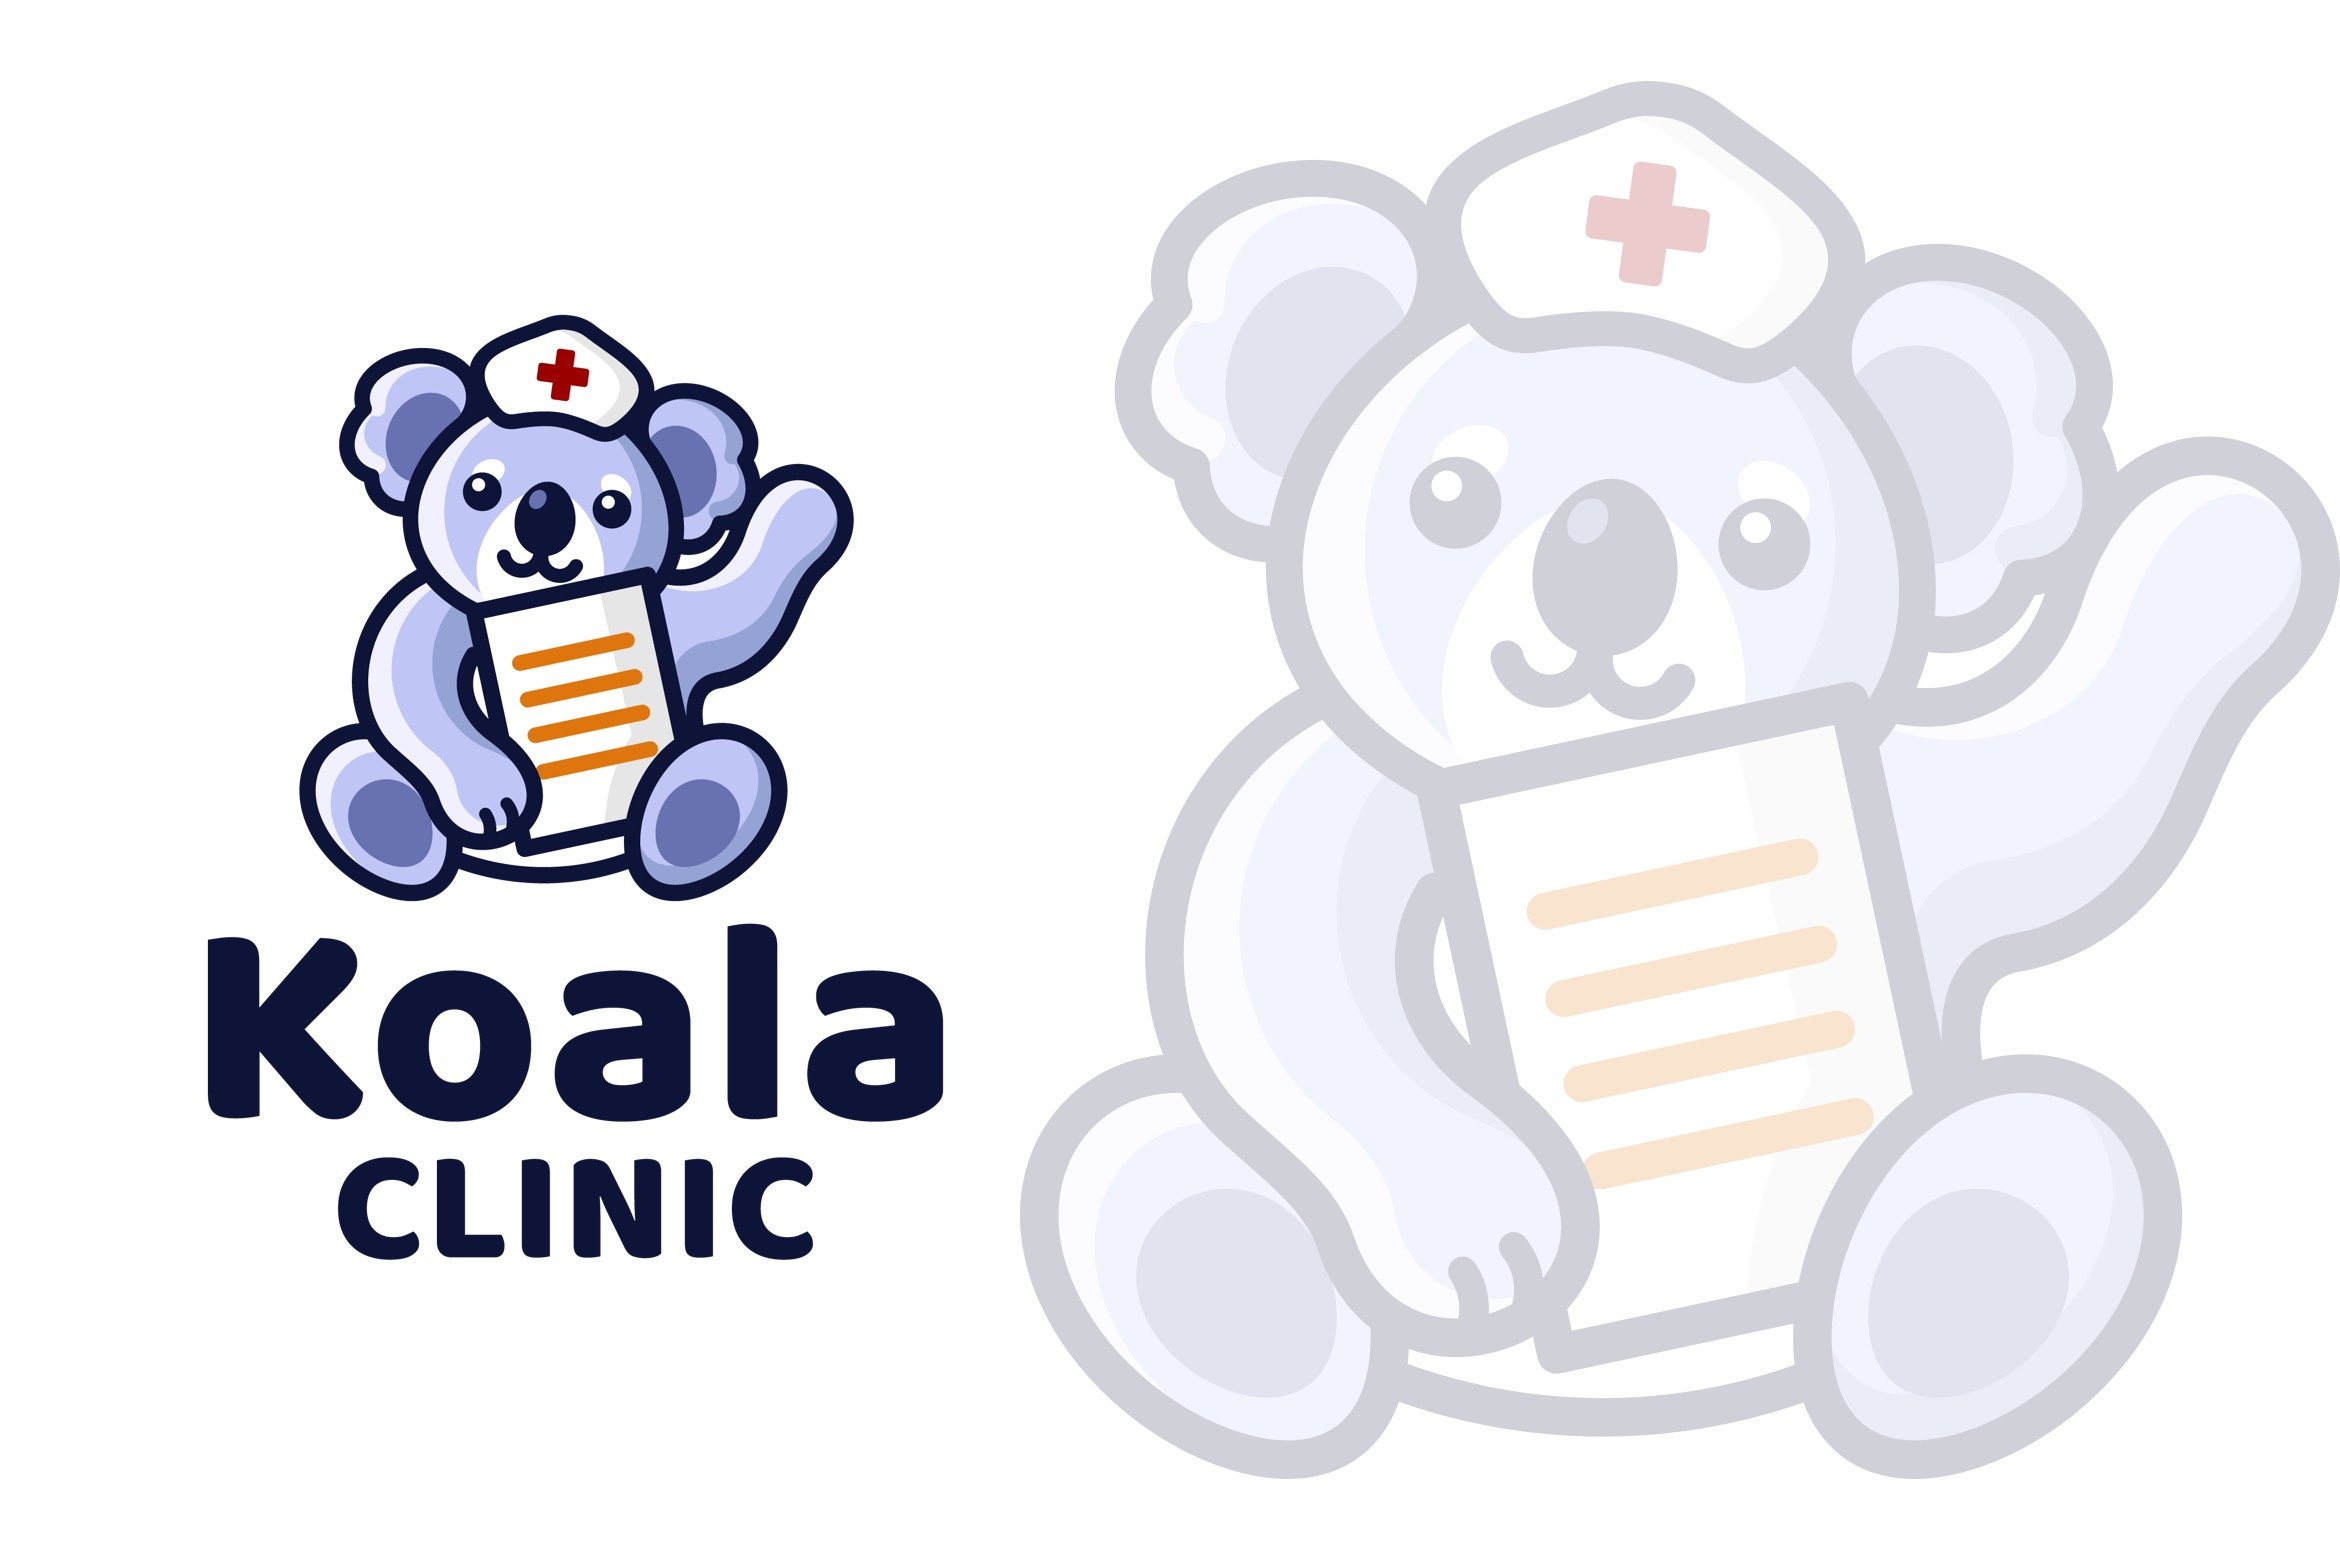 Koala Clinic Cute Kids Logo Template cover image.